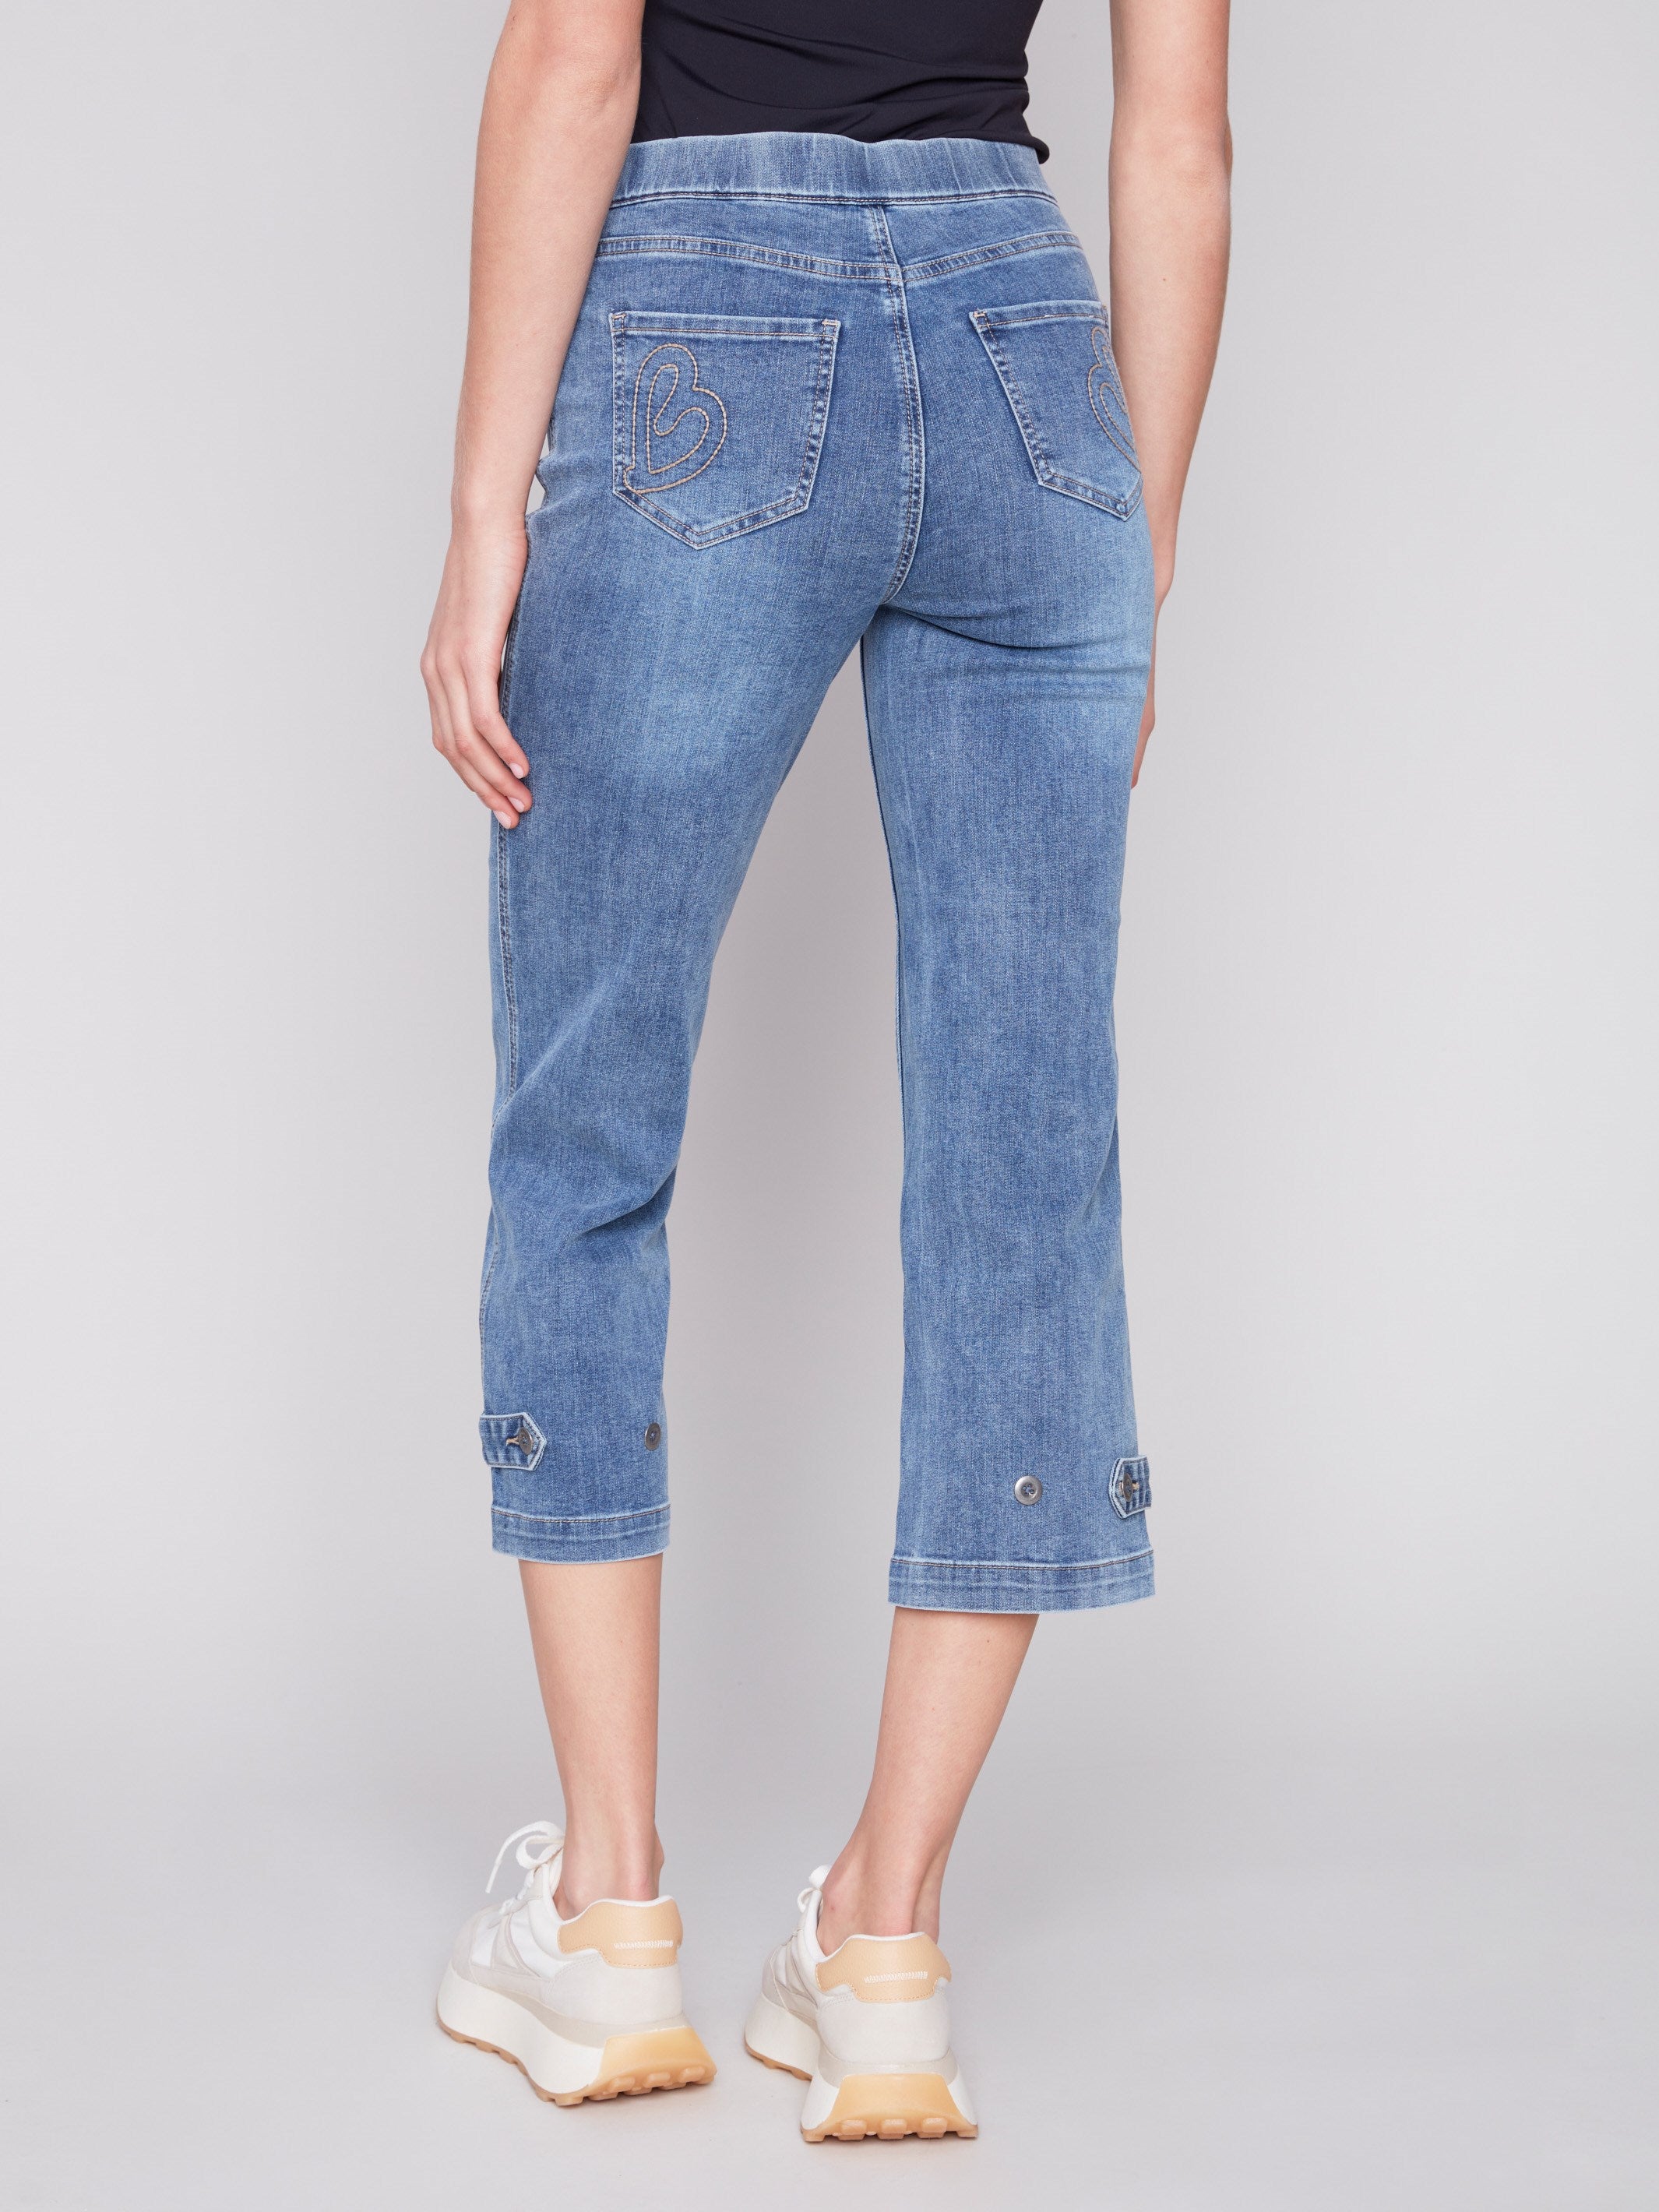 Charlie B Cropped Pull-On Jeans with Hem Tab - Medium Blue - Image 4